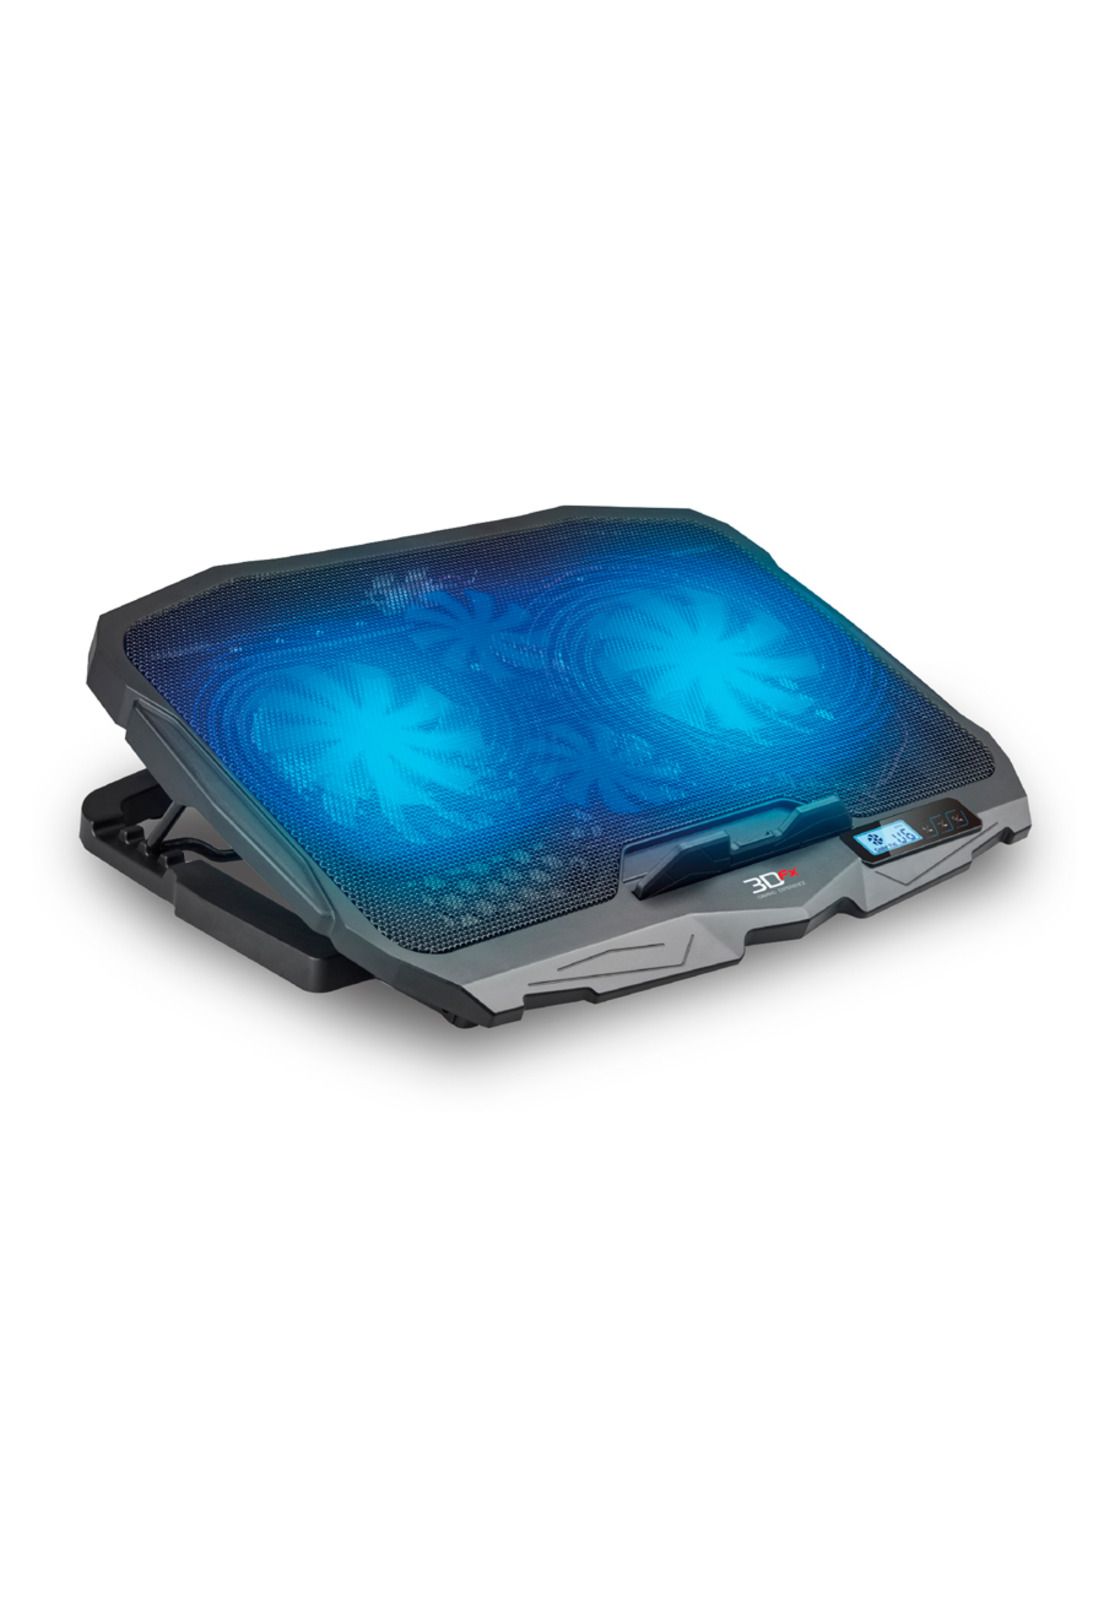 Base Ventilador 3DFX Notebook Gamer / Four Fan 17 / USB